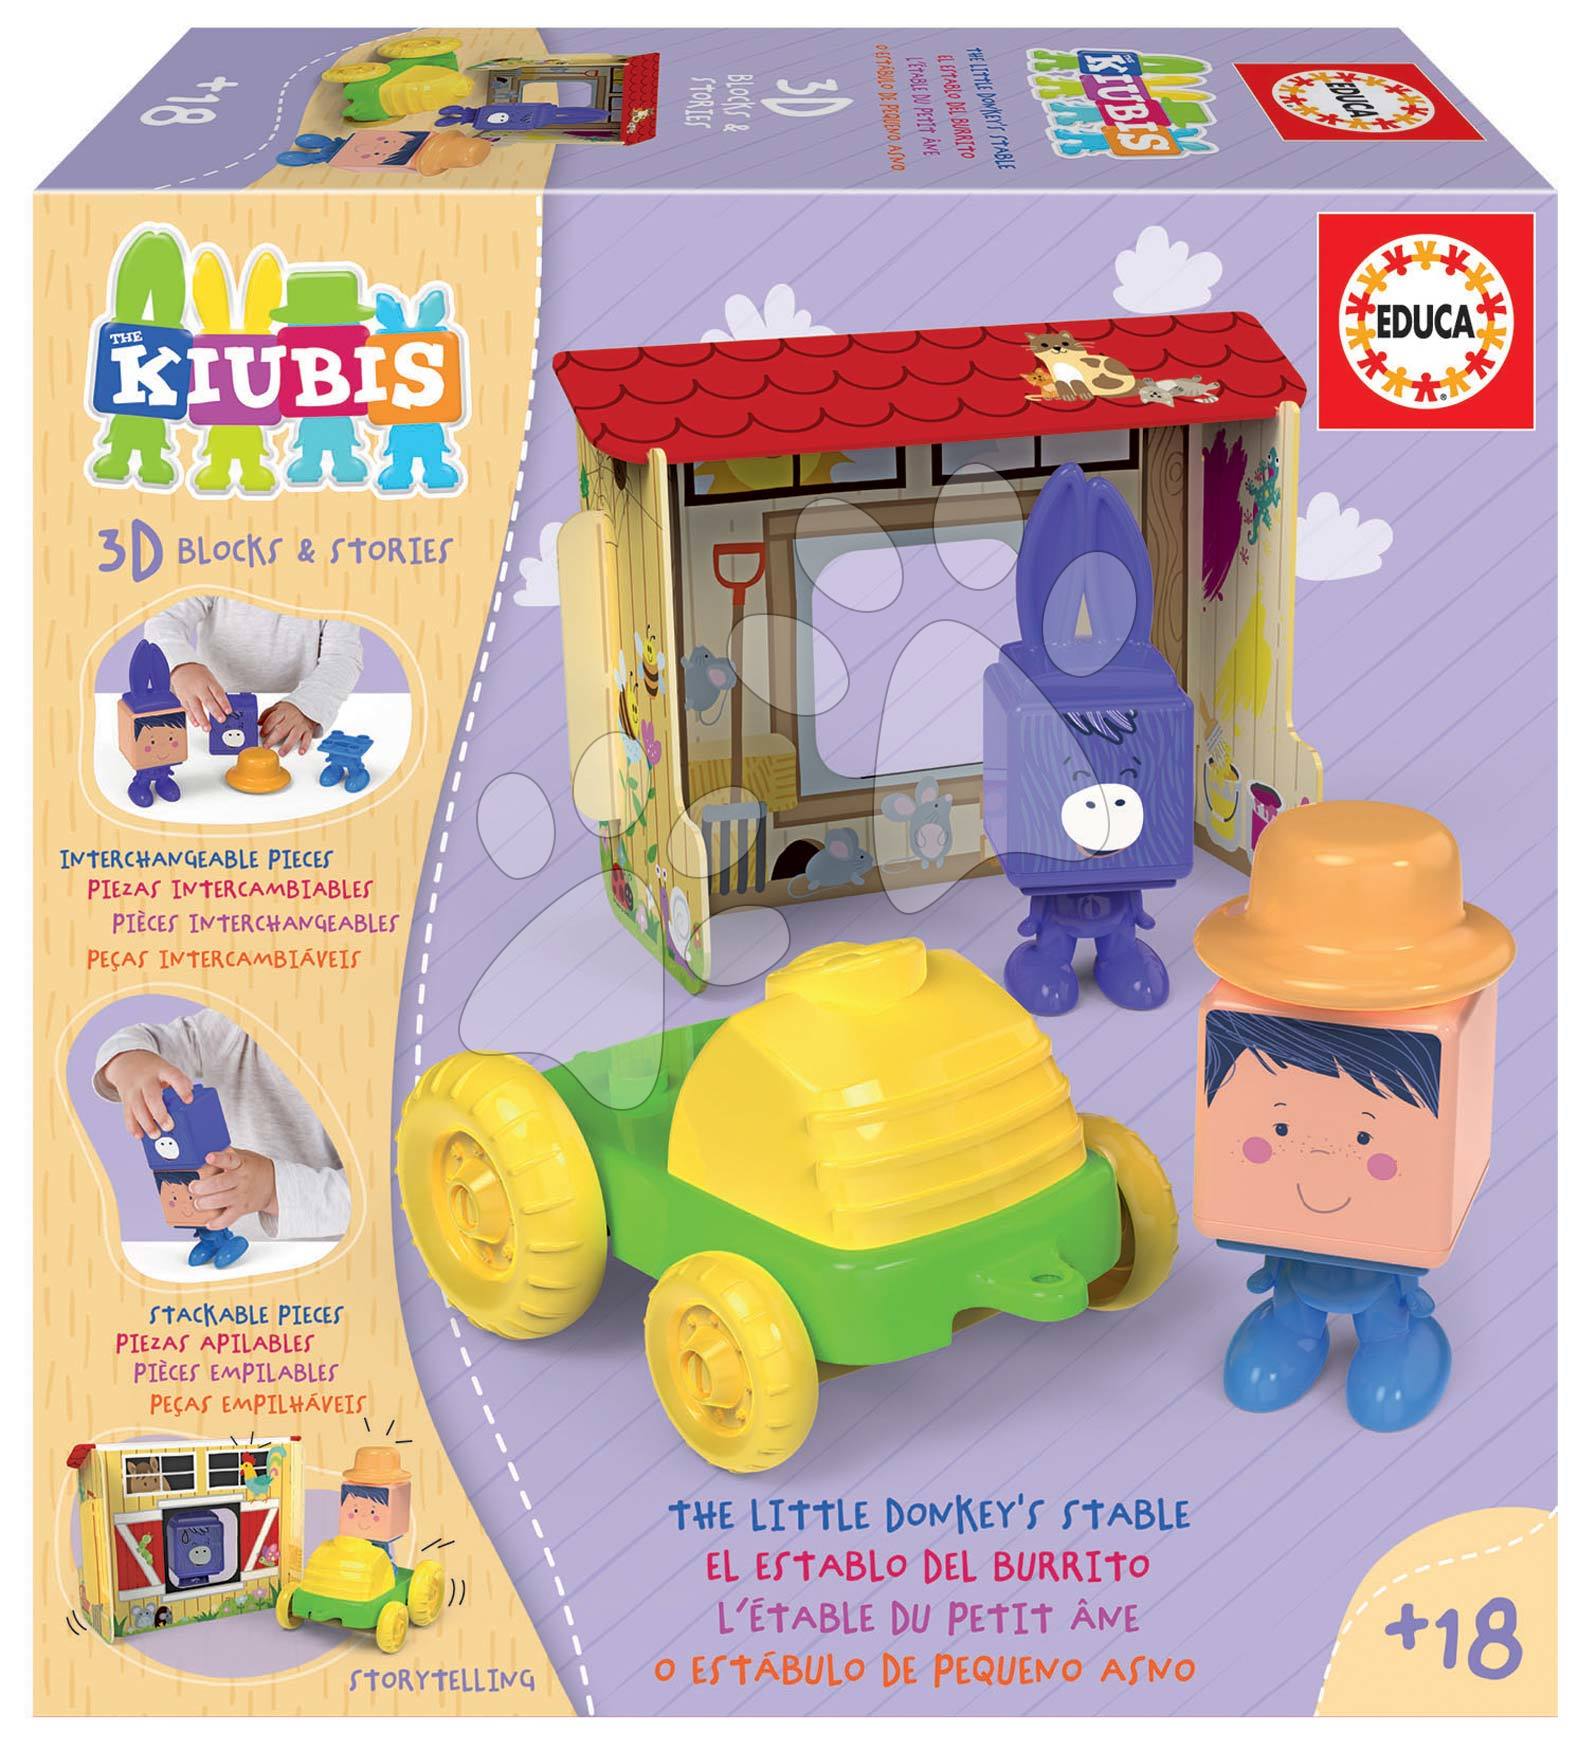 Skladačka Kiubis 3D Blocks & Stories The Little Donkey´s stable Educa 2 figúrky s traktorom a stajňou od 24 mes